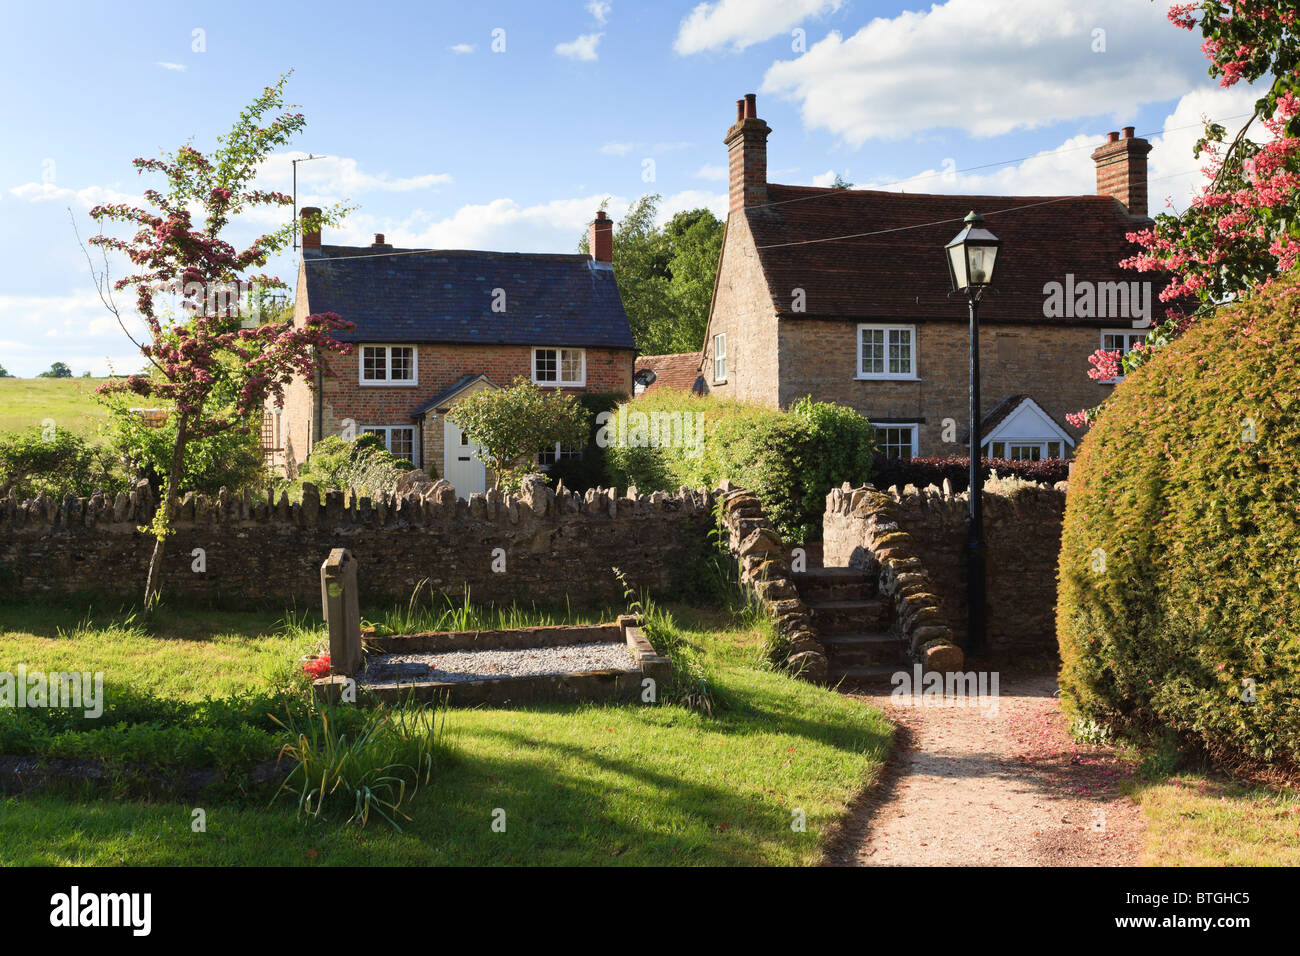 Churchyard path, Lamp, steps to the pretty village of Weston Underwood, Buckinghamshire, UK Stock Photo